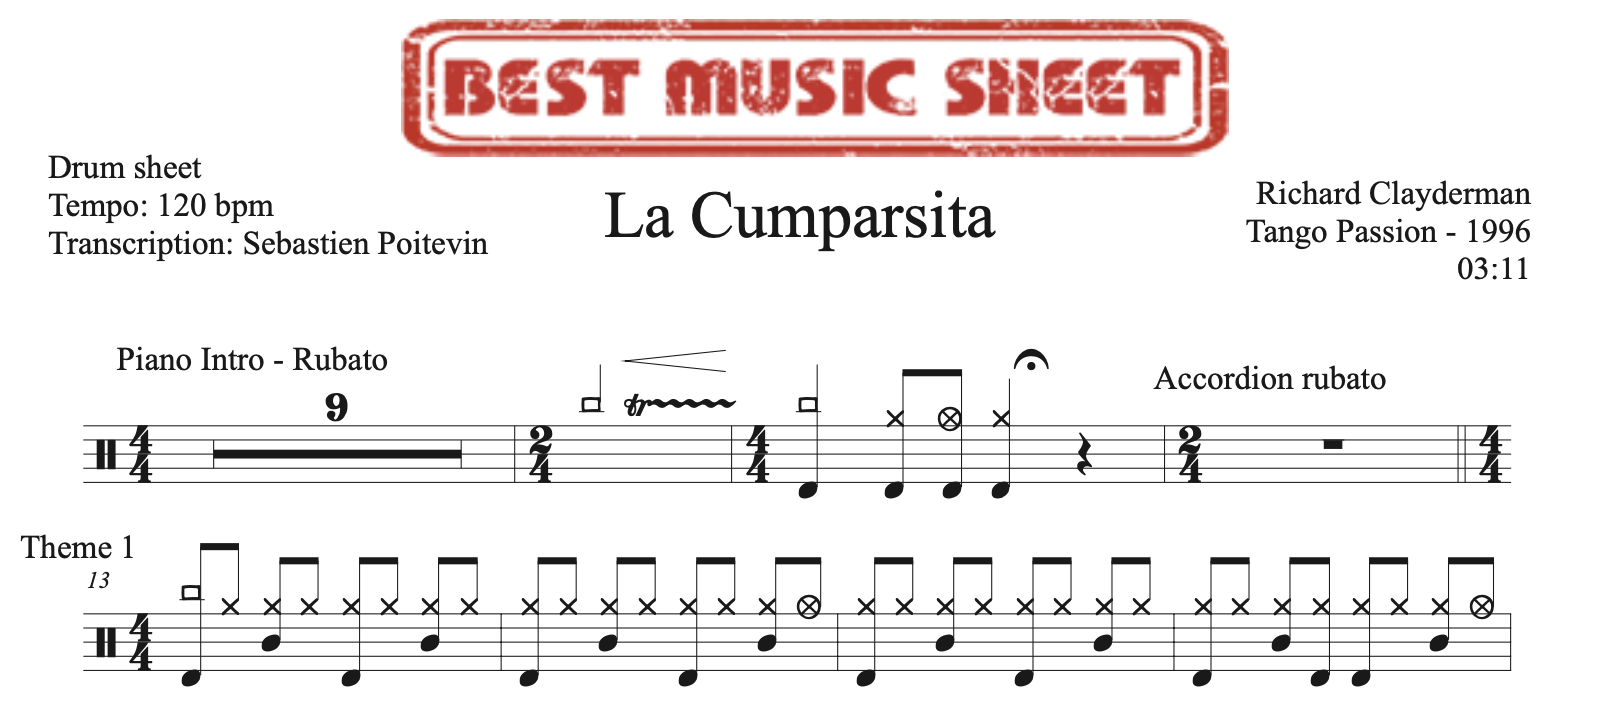 sample drum sheet of La Cumparsita by Richard Clayderman